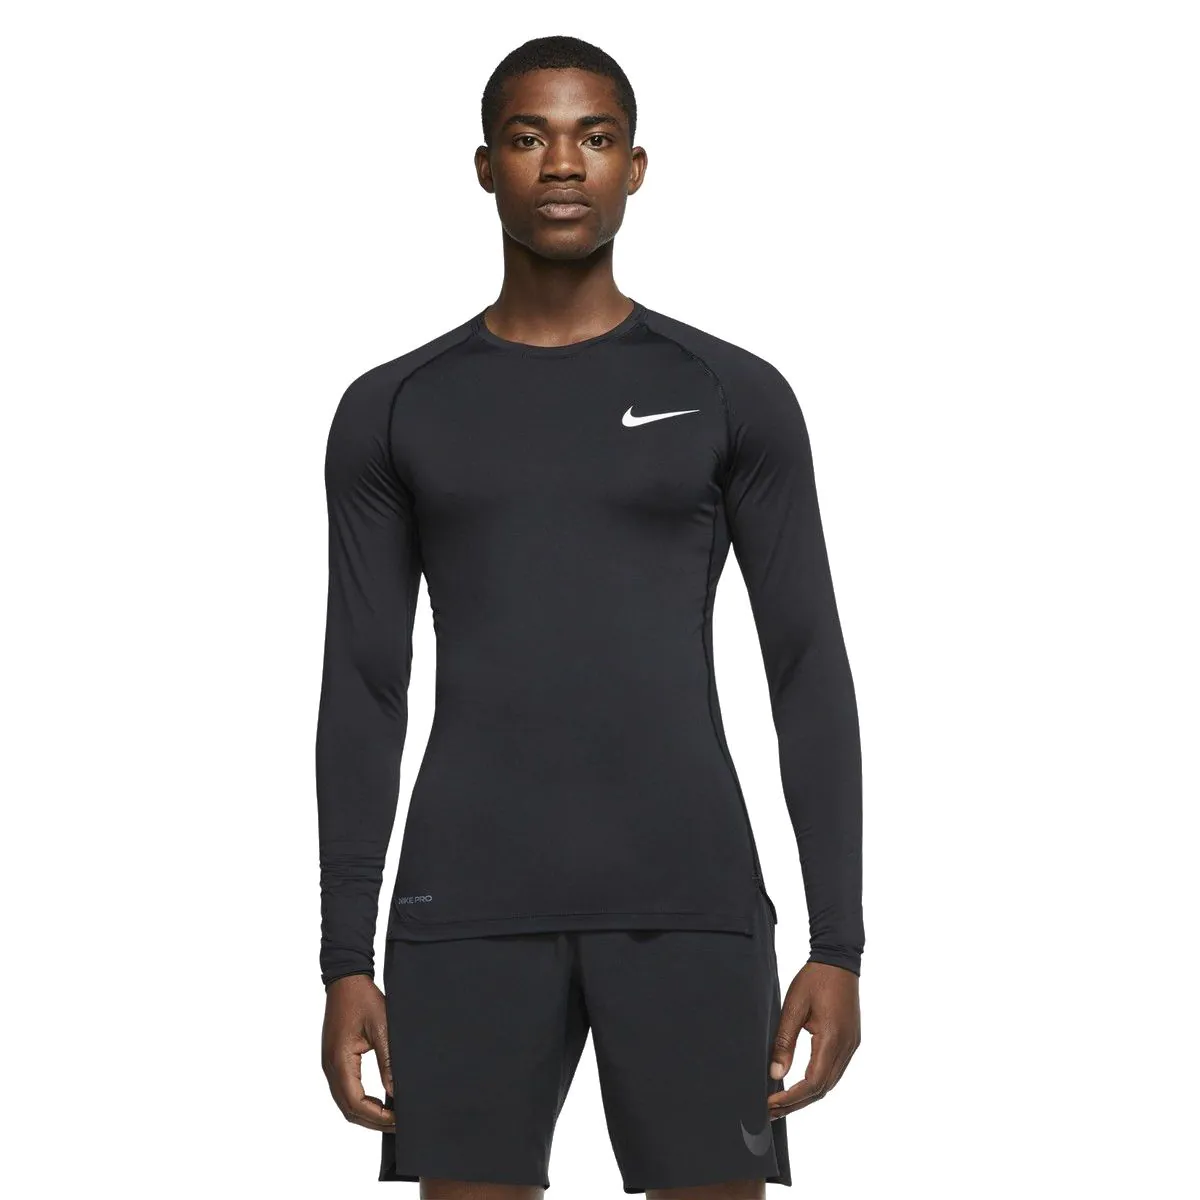 Nike Pro Men's Tight Fit Long-Sleeve Top BV5588-010